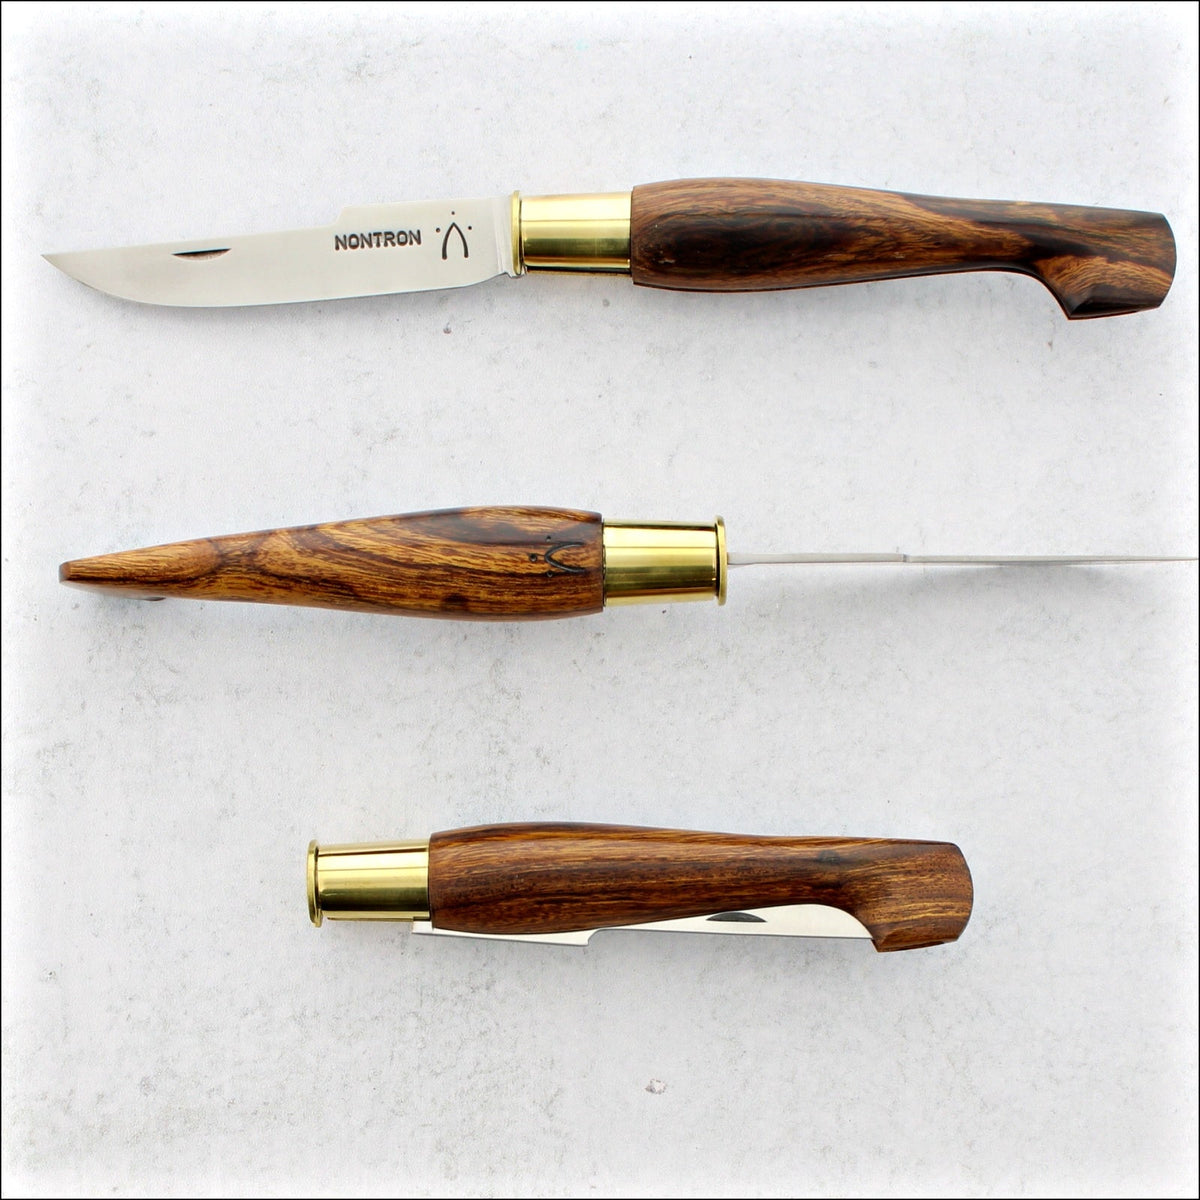 Nontron Pocket Knife No25 - Catalan blade Desert Ironwood